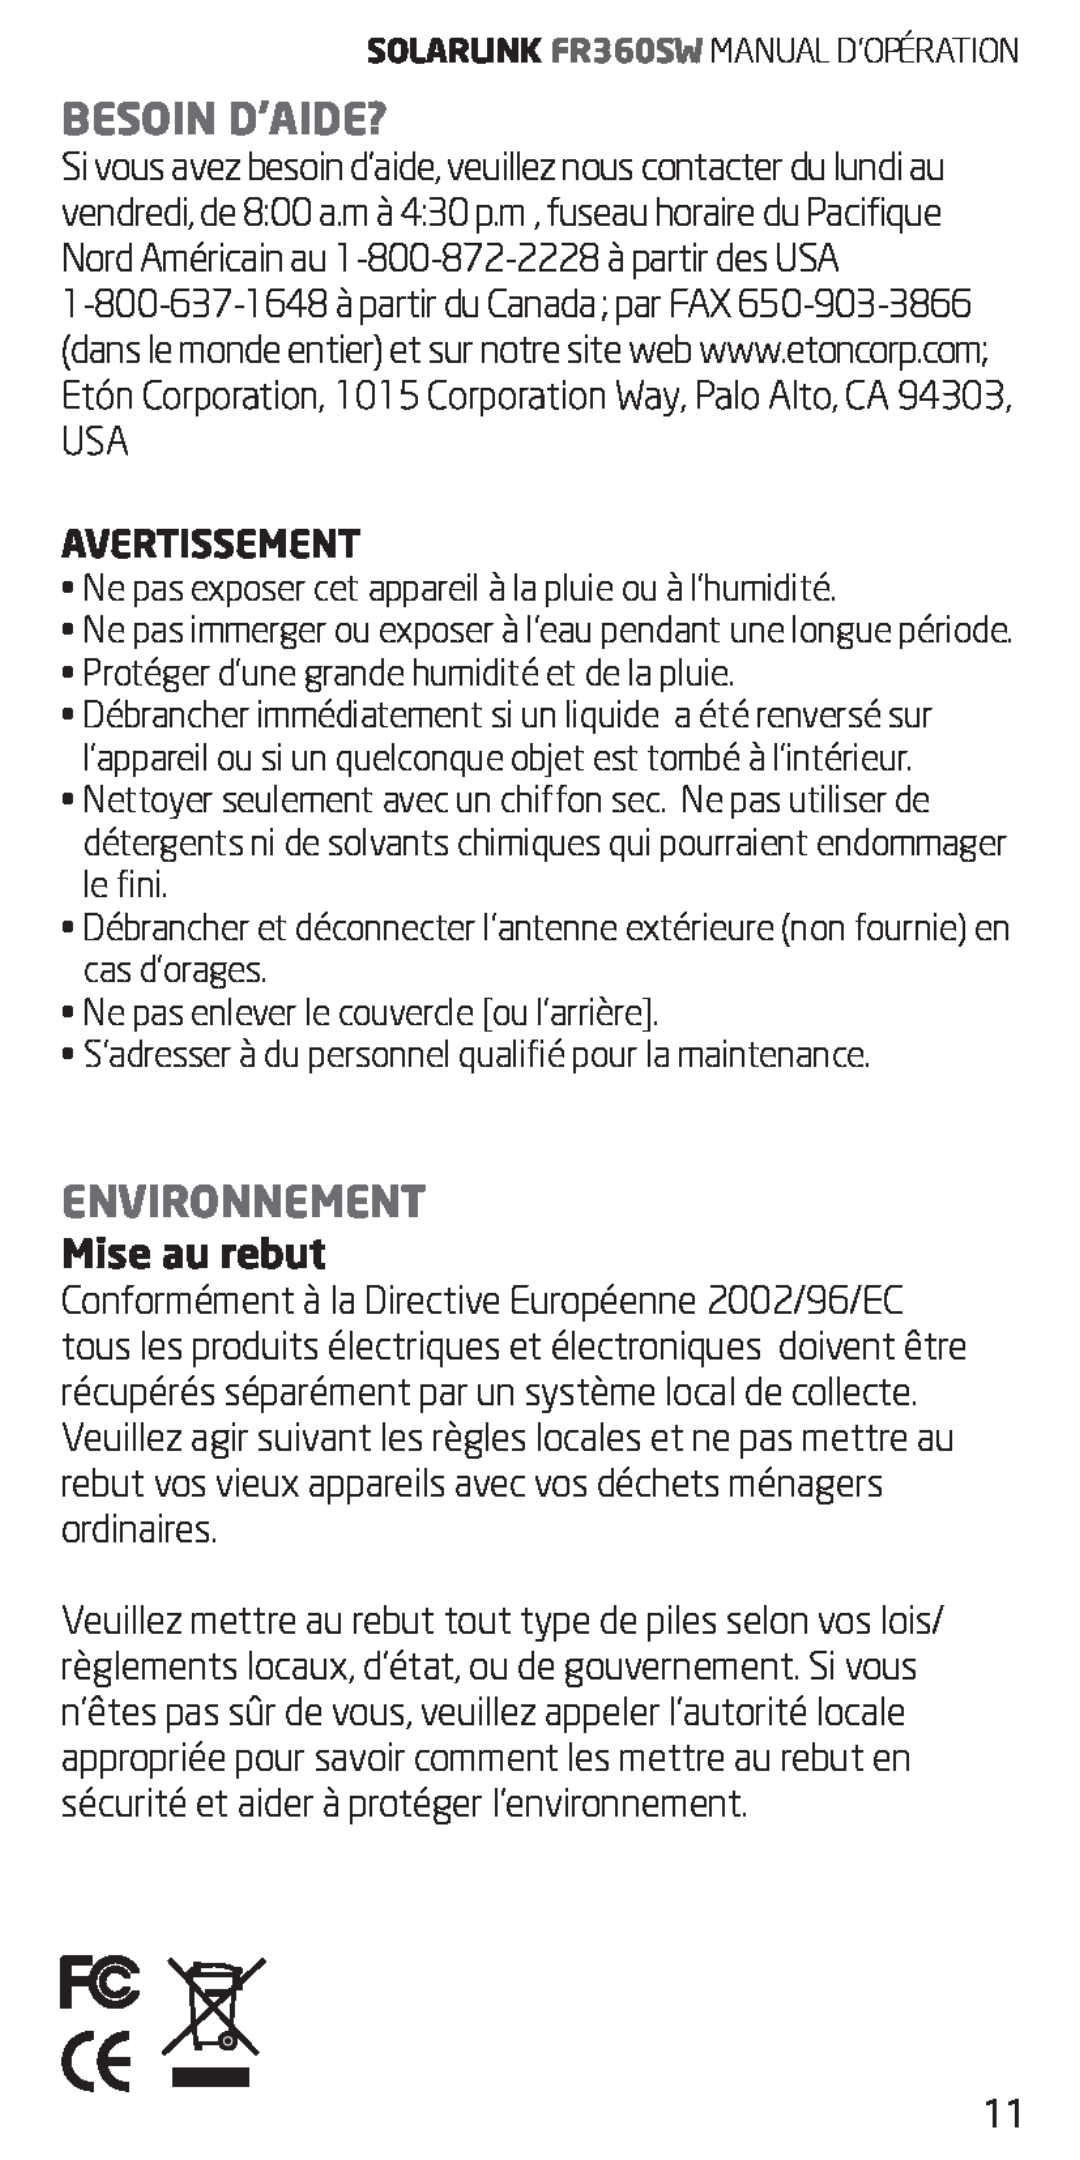 Eton FR360 owner manual Besoin D’Aide?, Environnement, Mise au rebut, Avertissement 